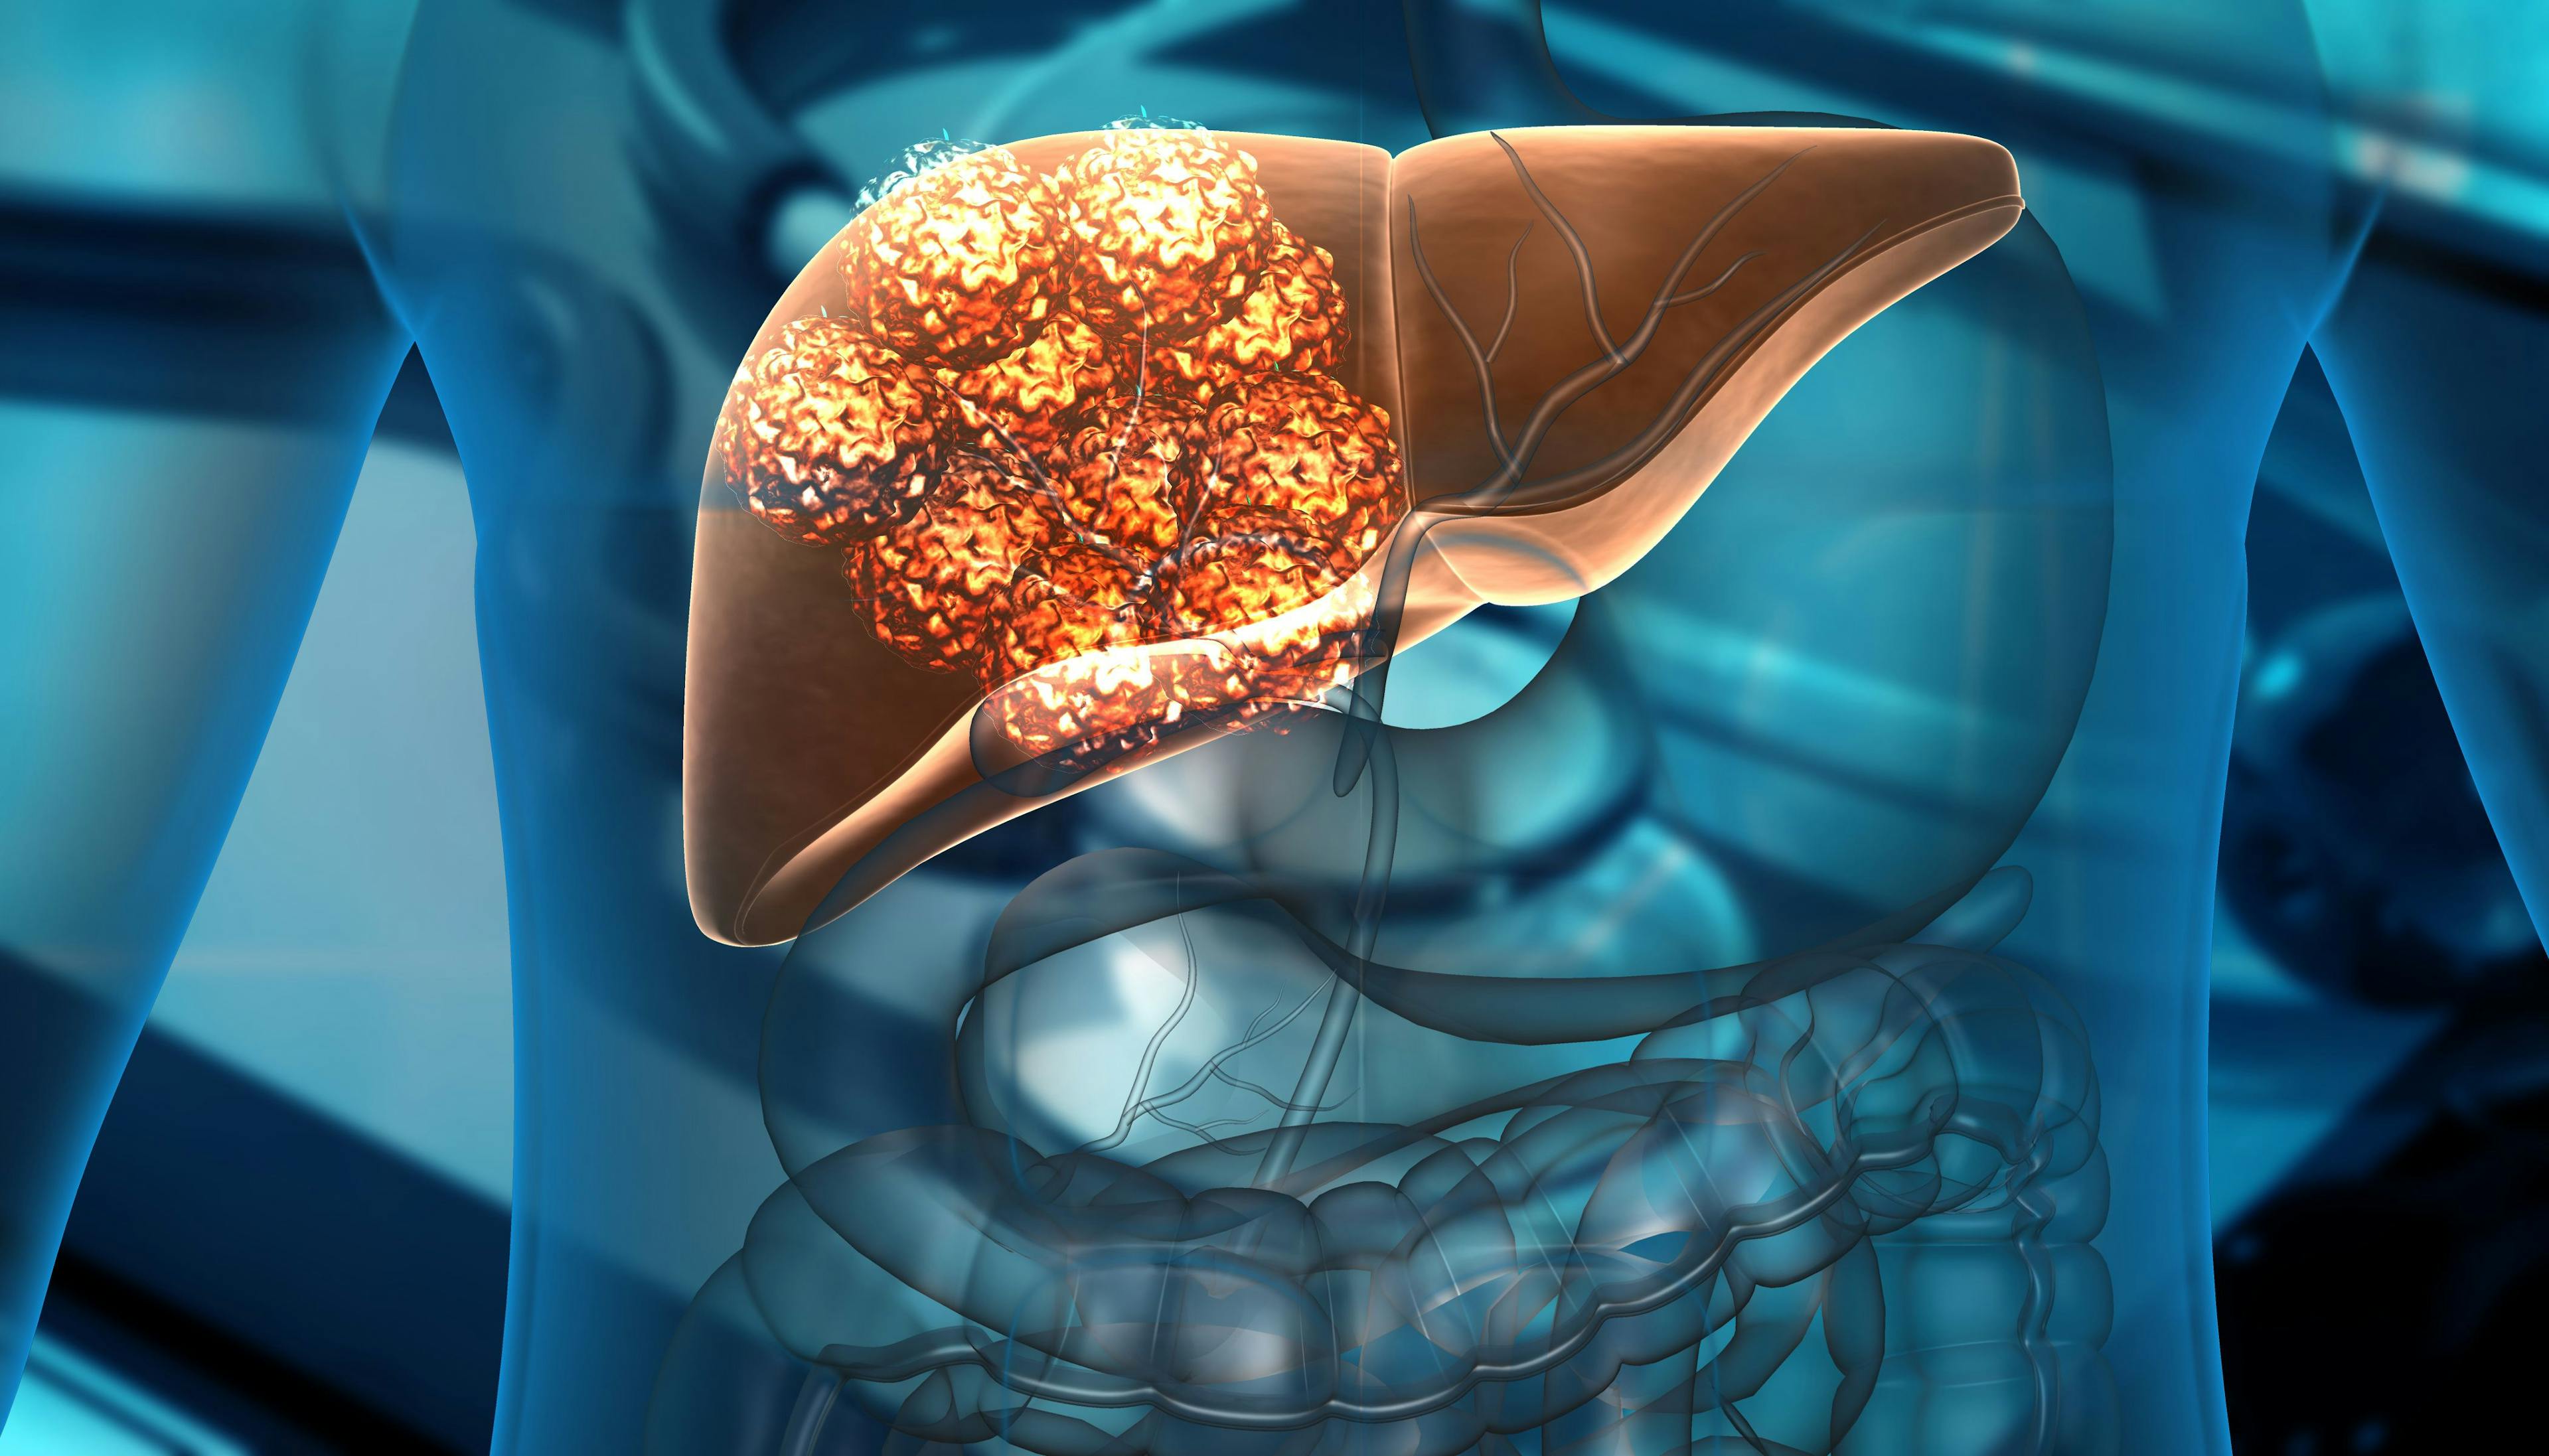 Patient with liver metastases | Image Credit: Rasi - stock.adobe.com